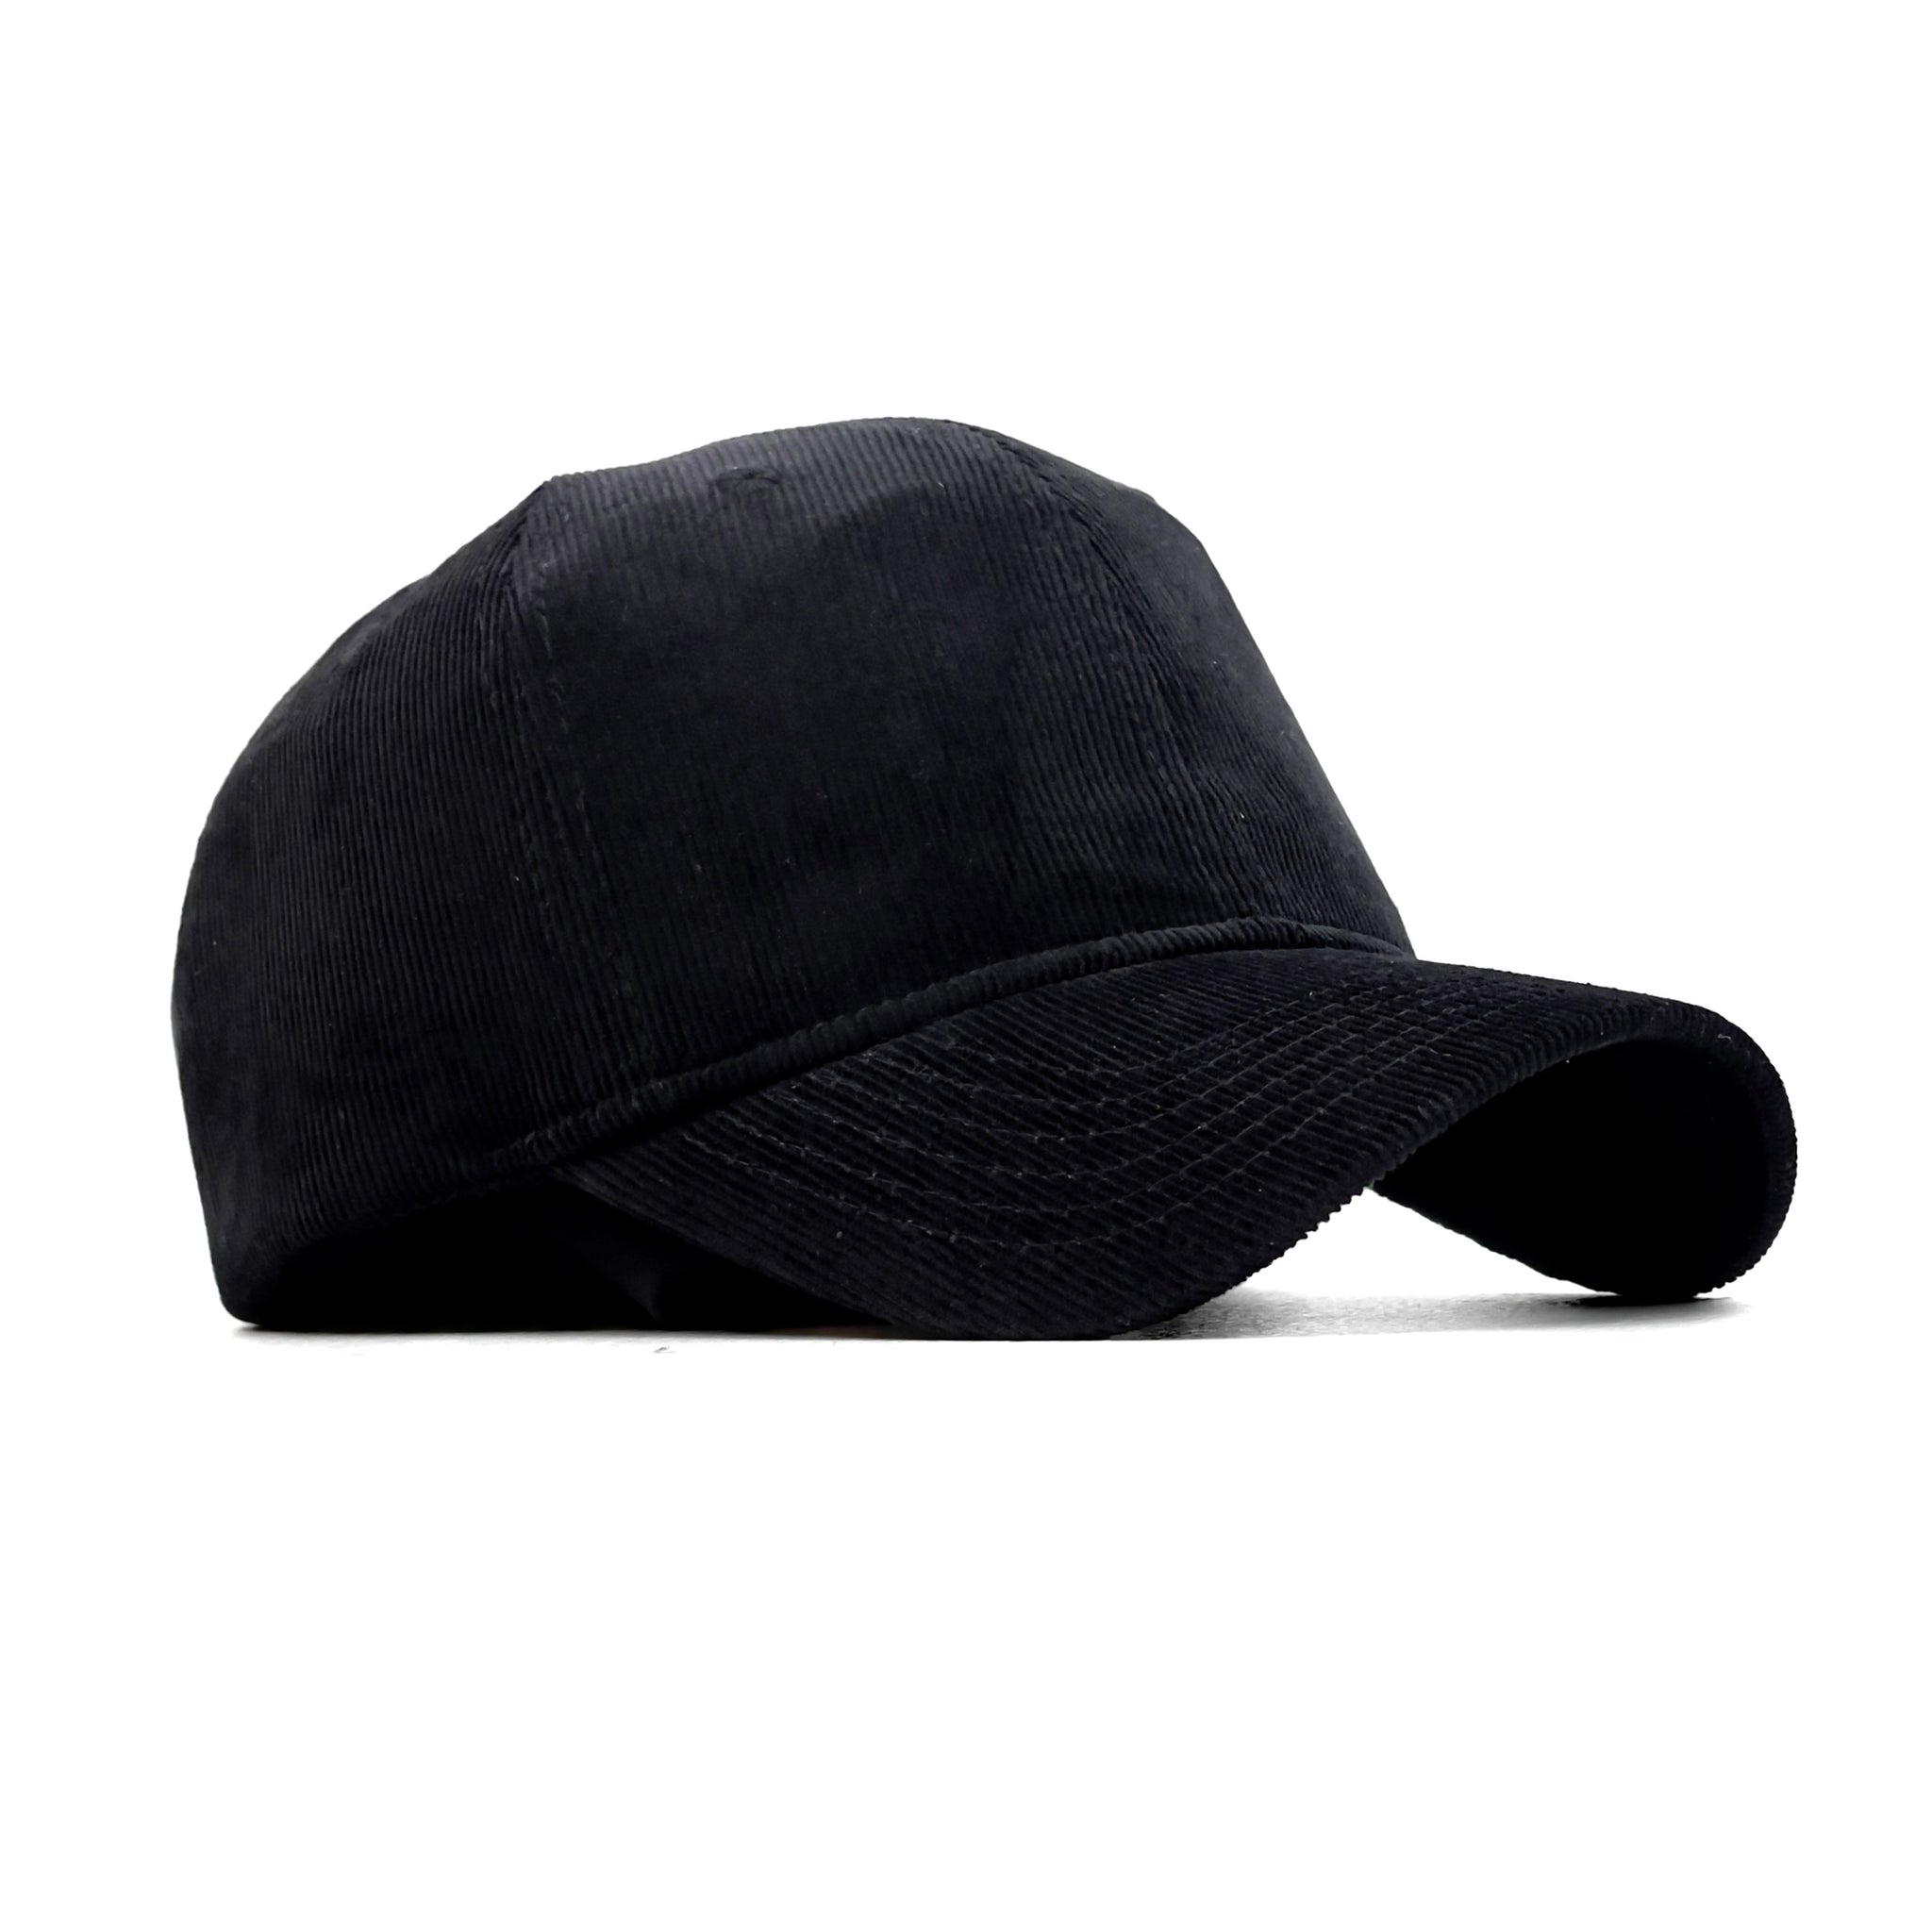 HEAD GEAR BLACK CORDUROY CAP